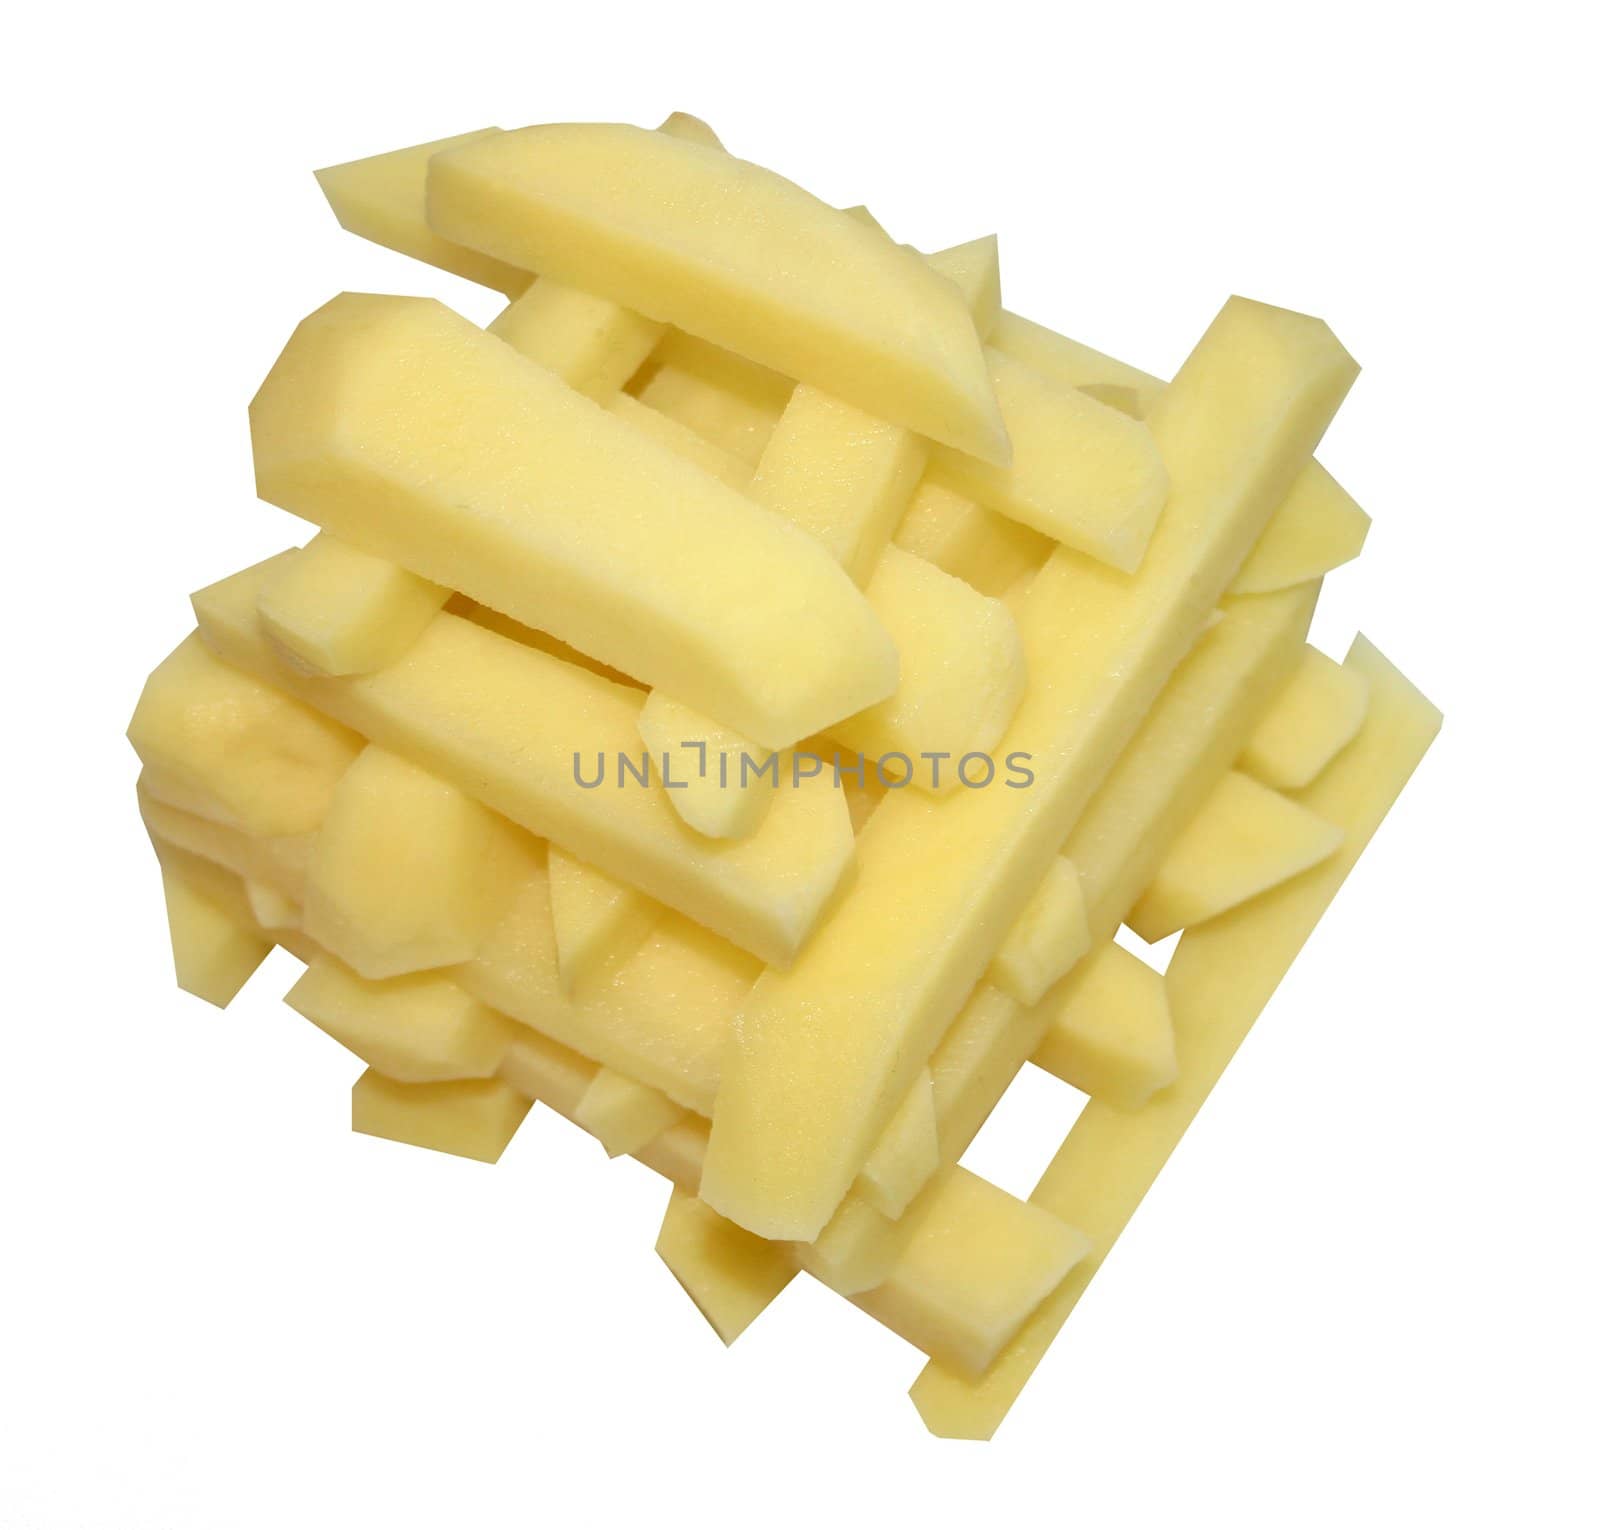 Potato cut by whetstones, strips, rectangles as pomes fries